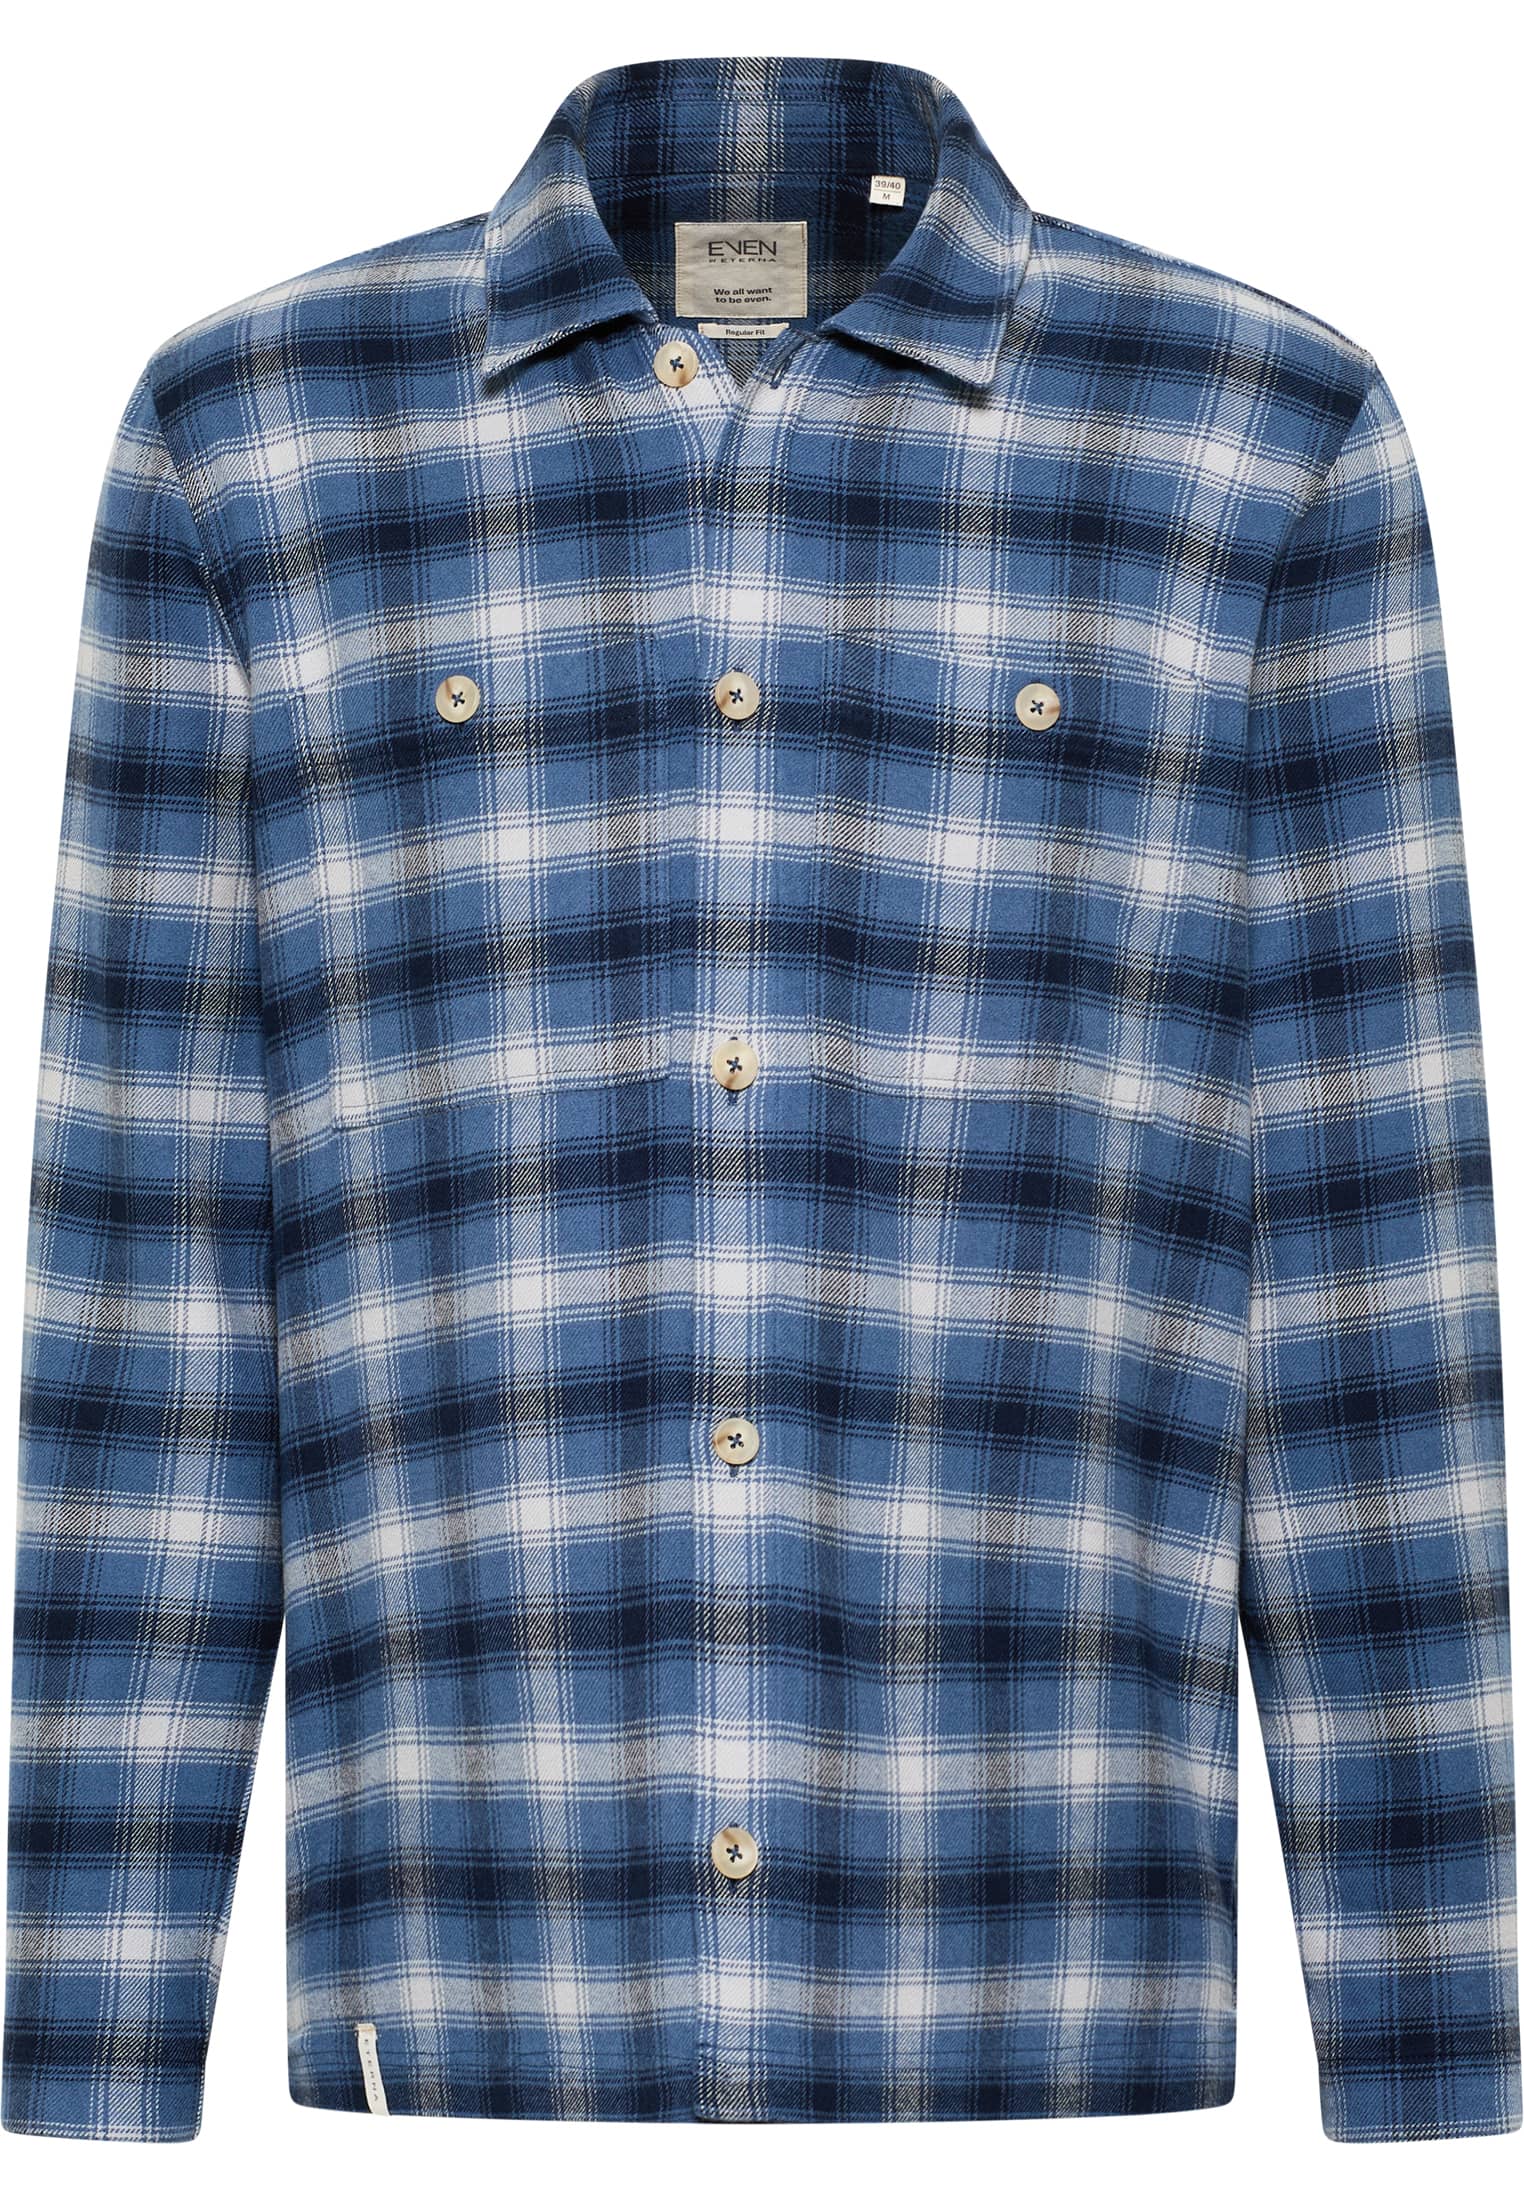 REGULAR FIT Shirt in blue-gray checkered